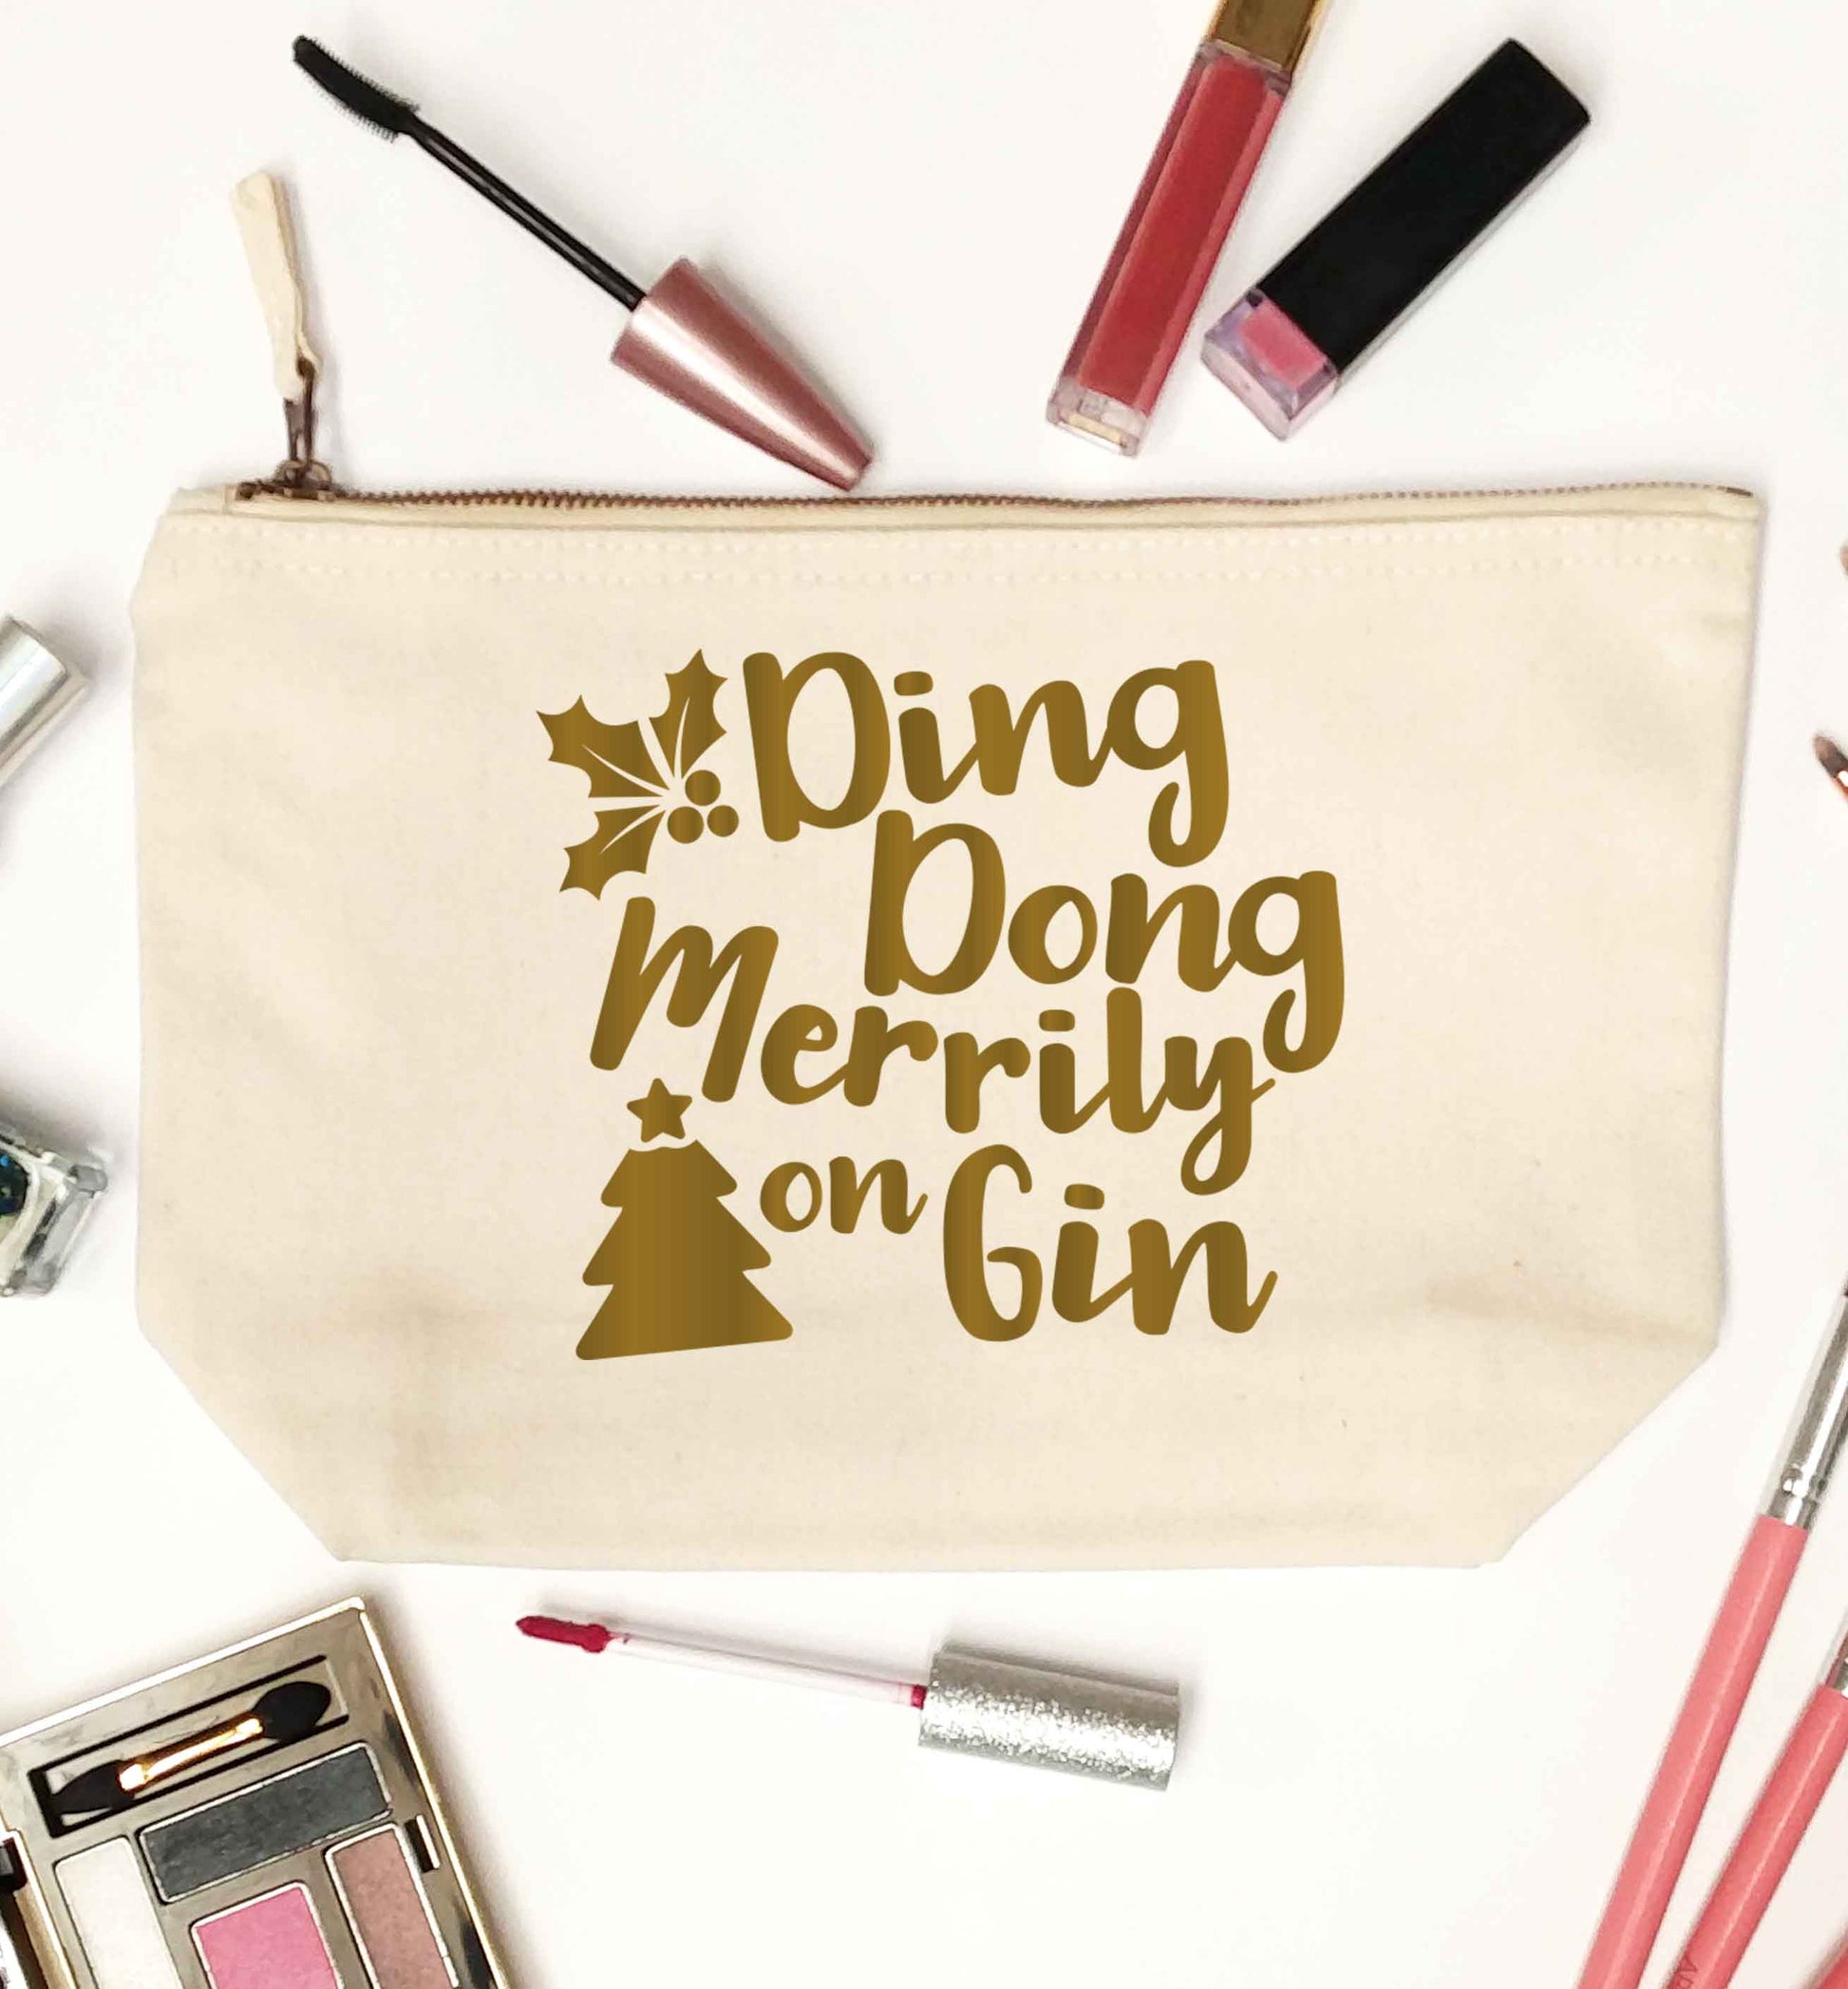 Ding dong merrily on gin natural makeup bag